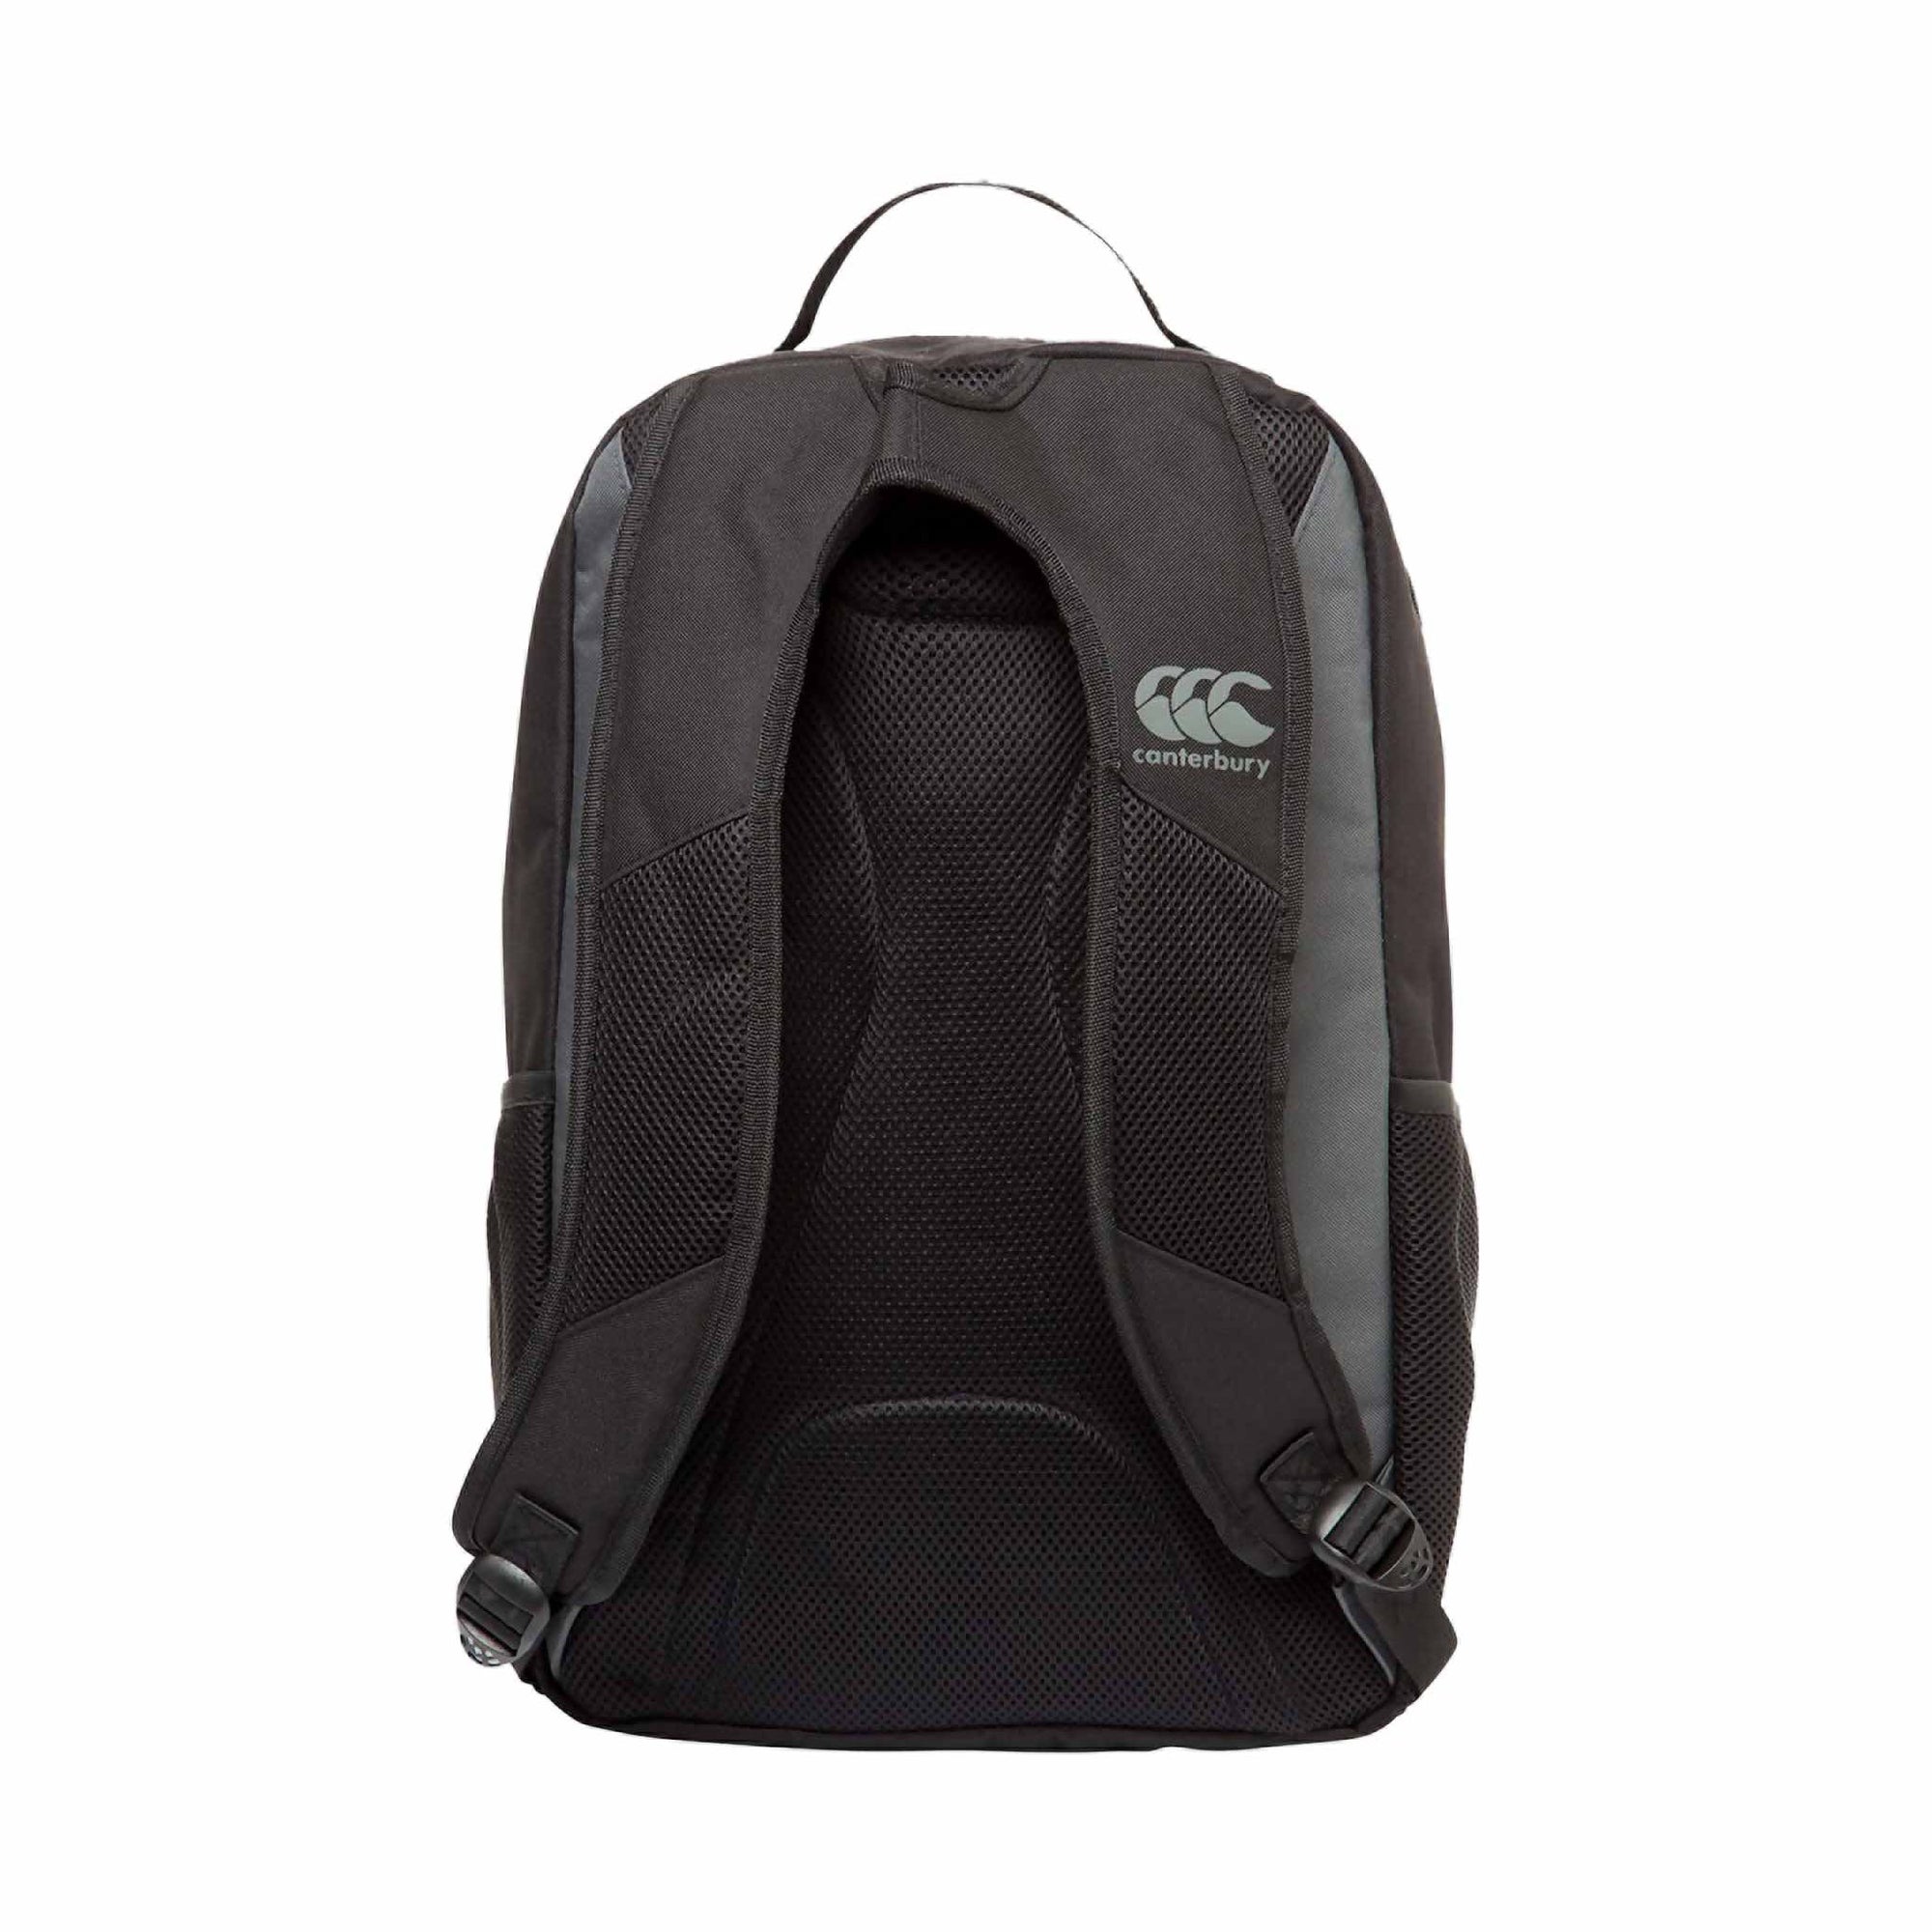 Williams Lake Rustler RFC Canterbury backpack Black